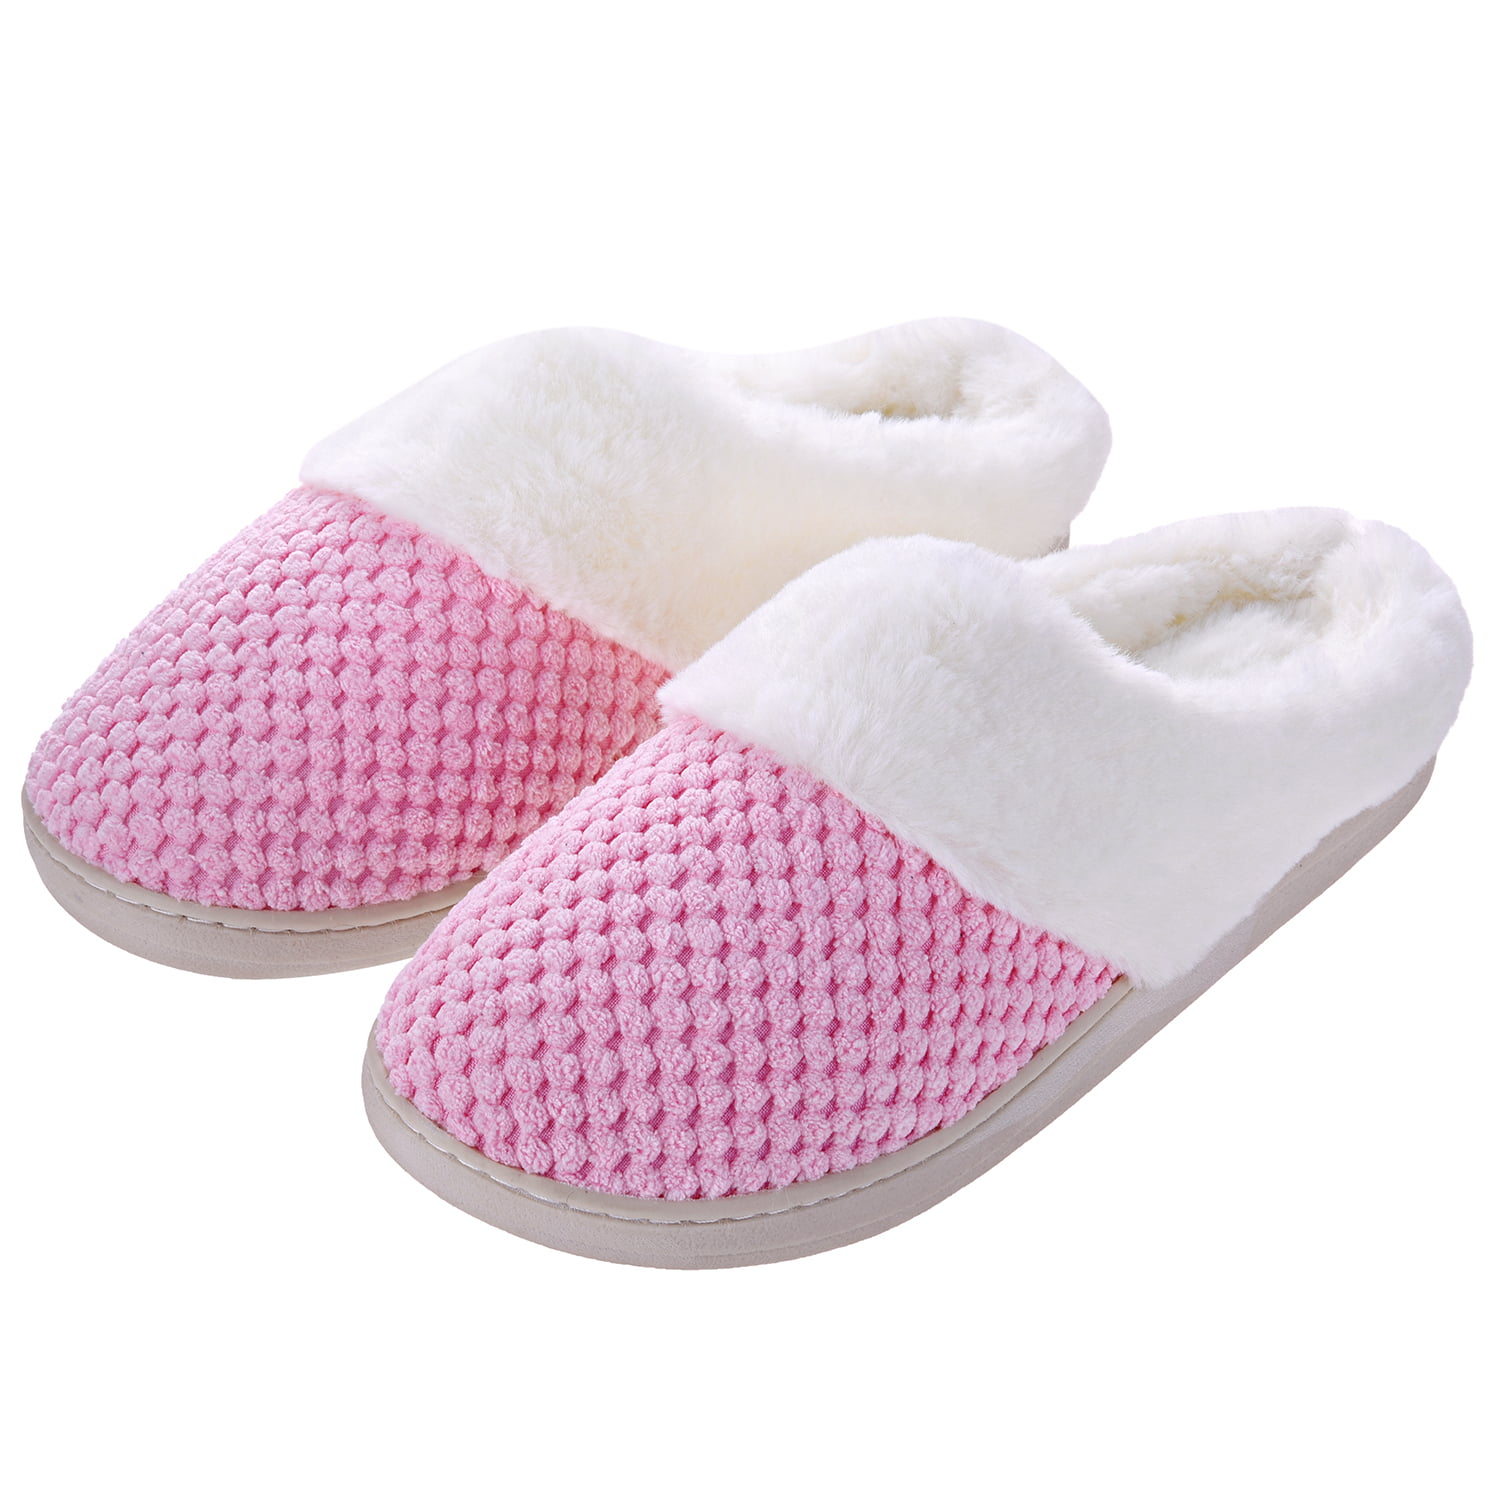 Dasein - Women's Slippers House Shoes Fleece Fuzzy Plush Lining Comfort ...